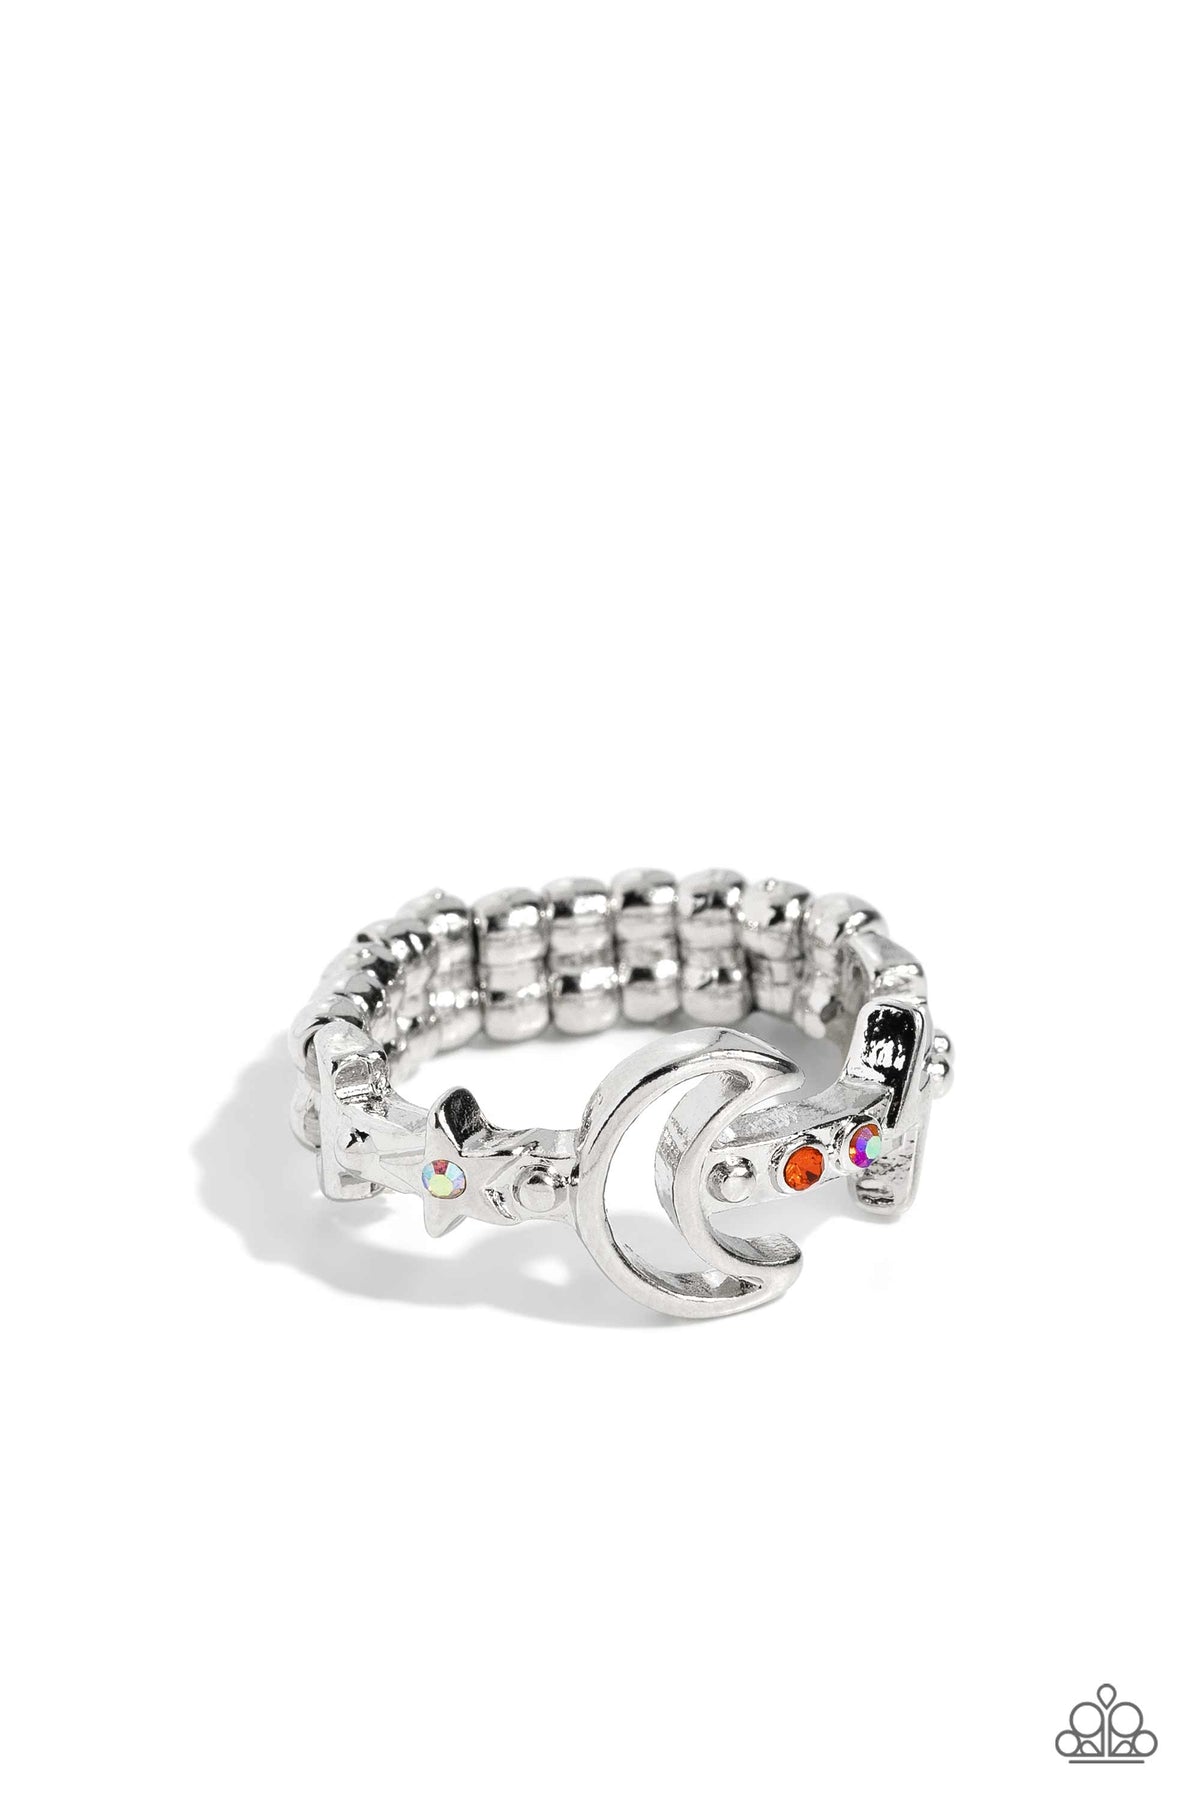 Modeling Moon Orange &amp; Iridescent Rhinestone Ring - Paparazzi Accessories- lightbox - CarasShop.com - $5 Jewelry by Cara Jewels